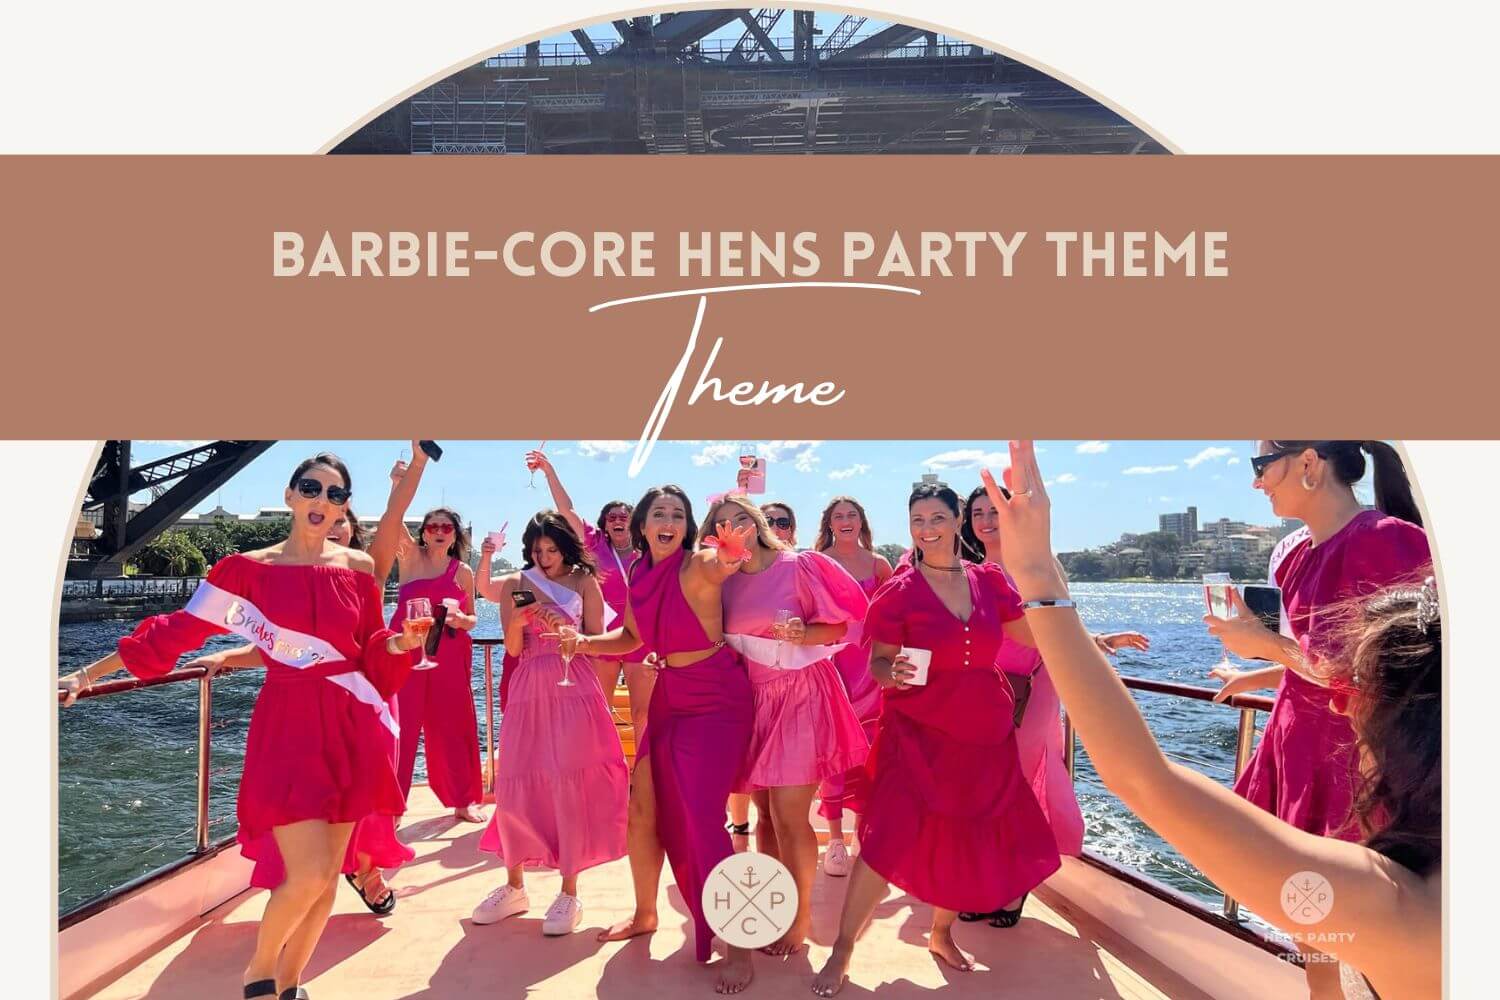 barbie-core hens party theme